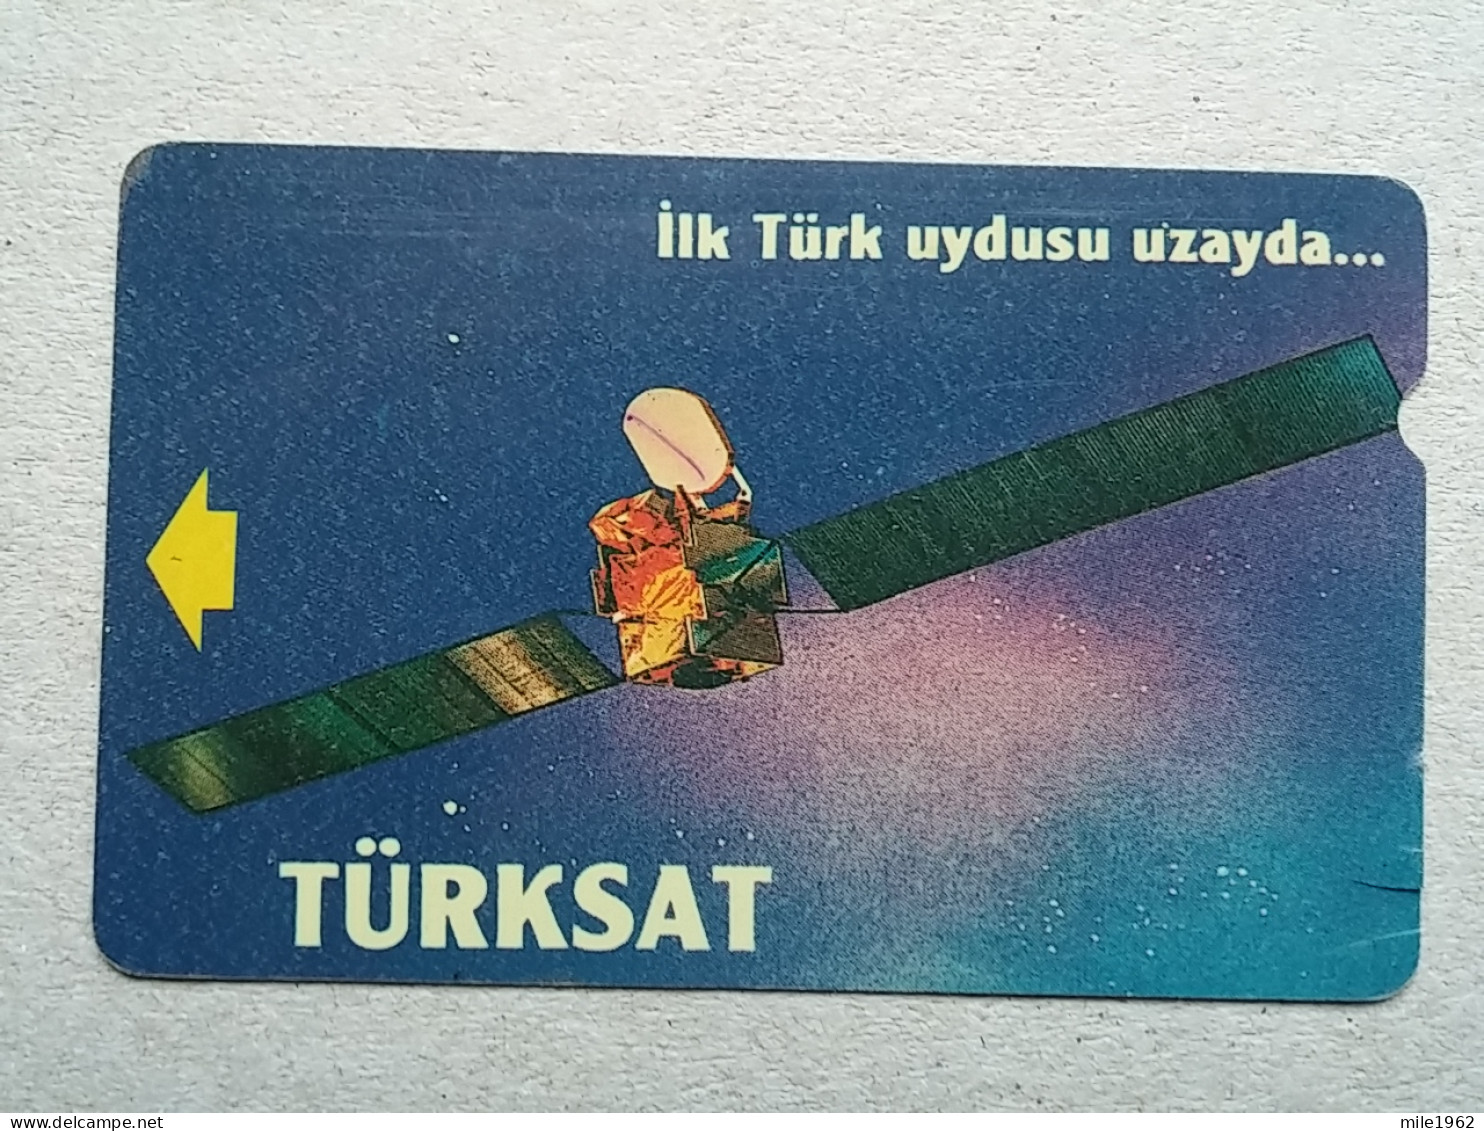 T-597 - TURKEY, Telecard, Télécarte, Phonecard - Turquie